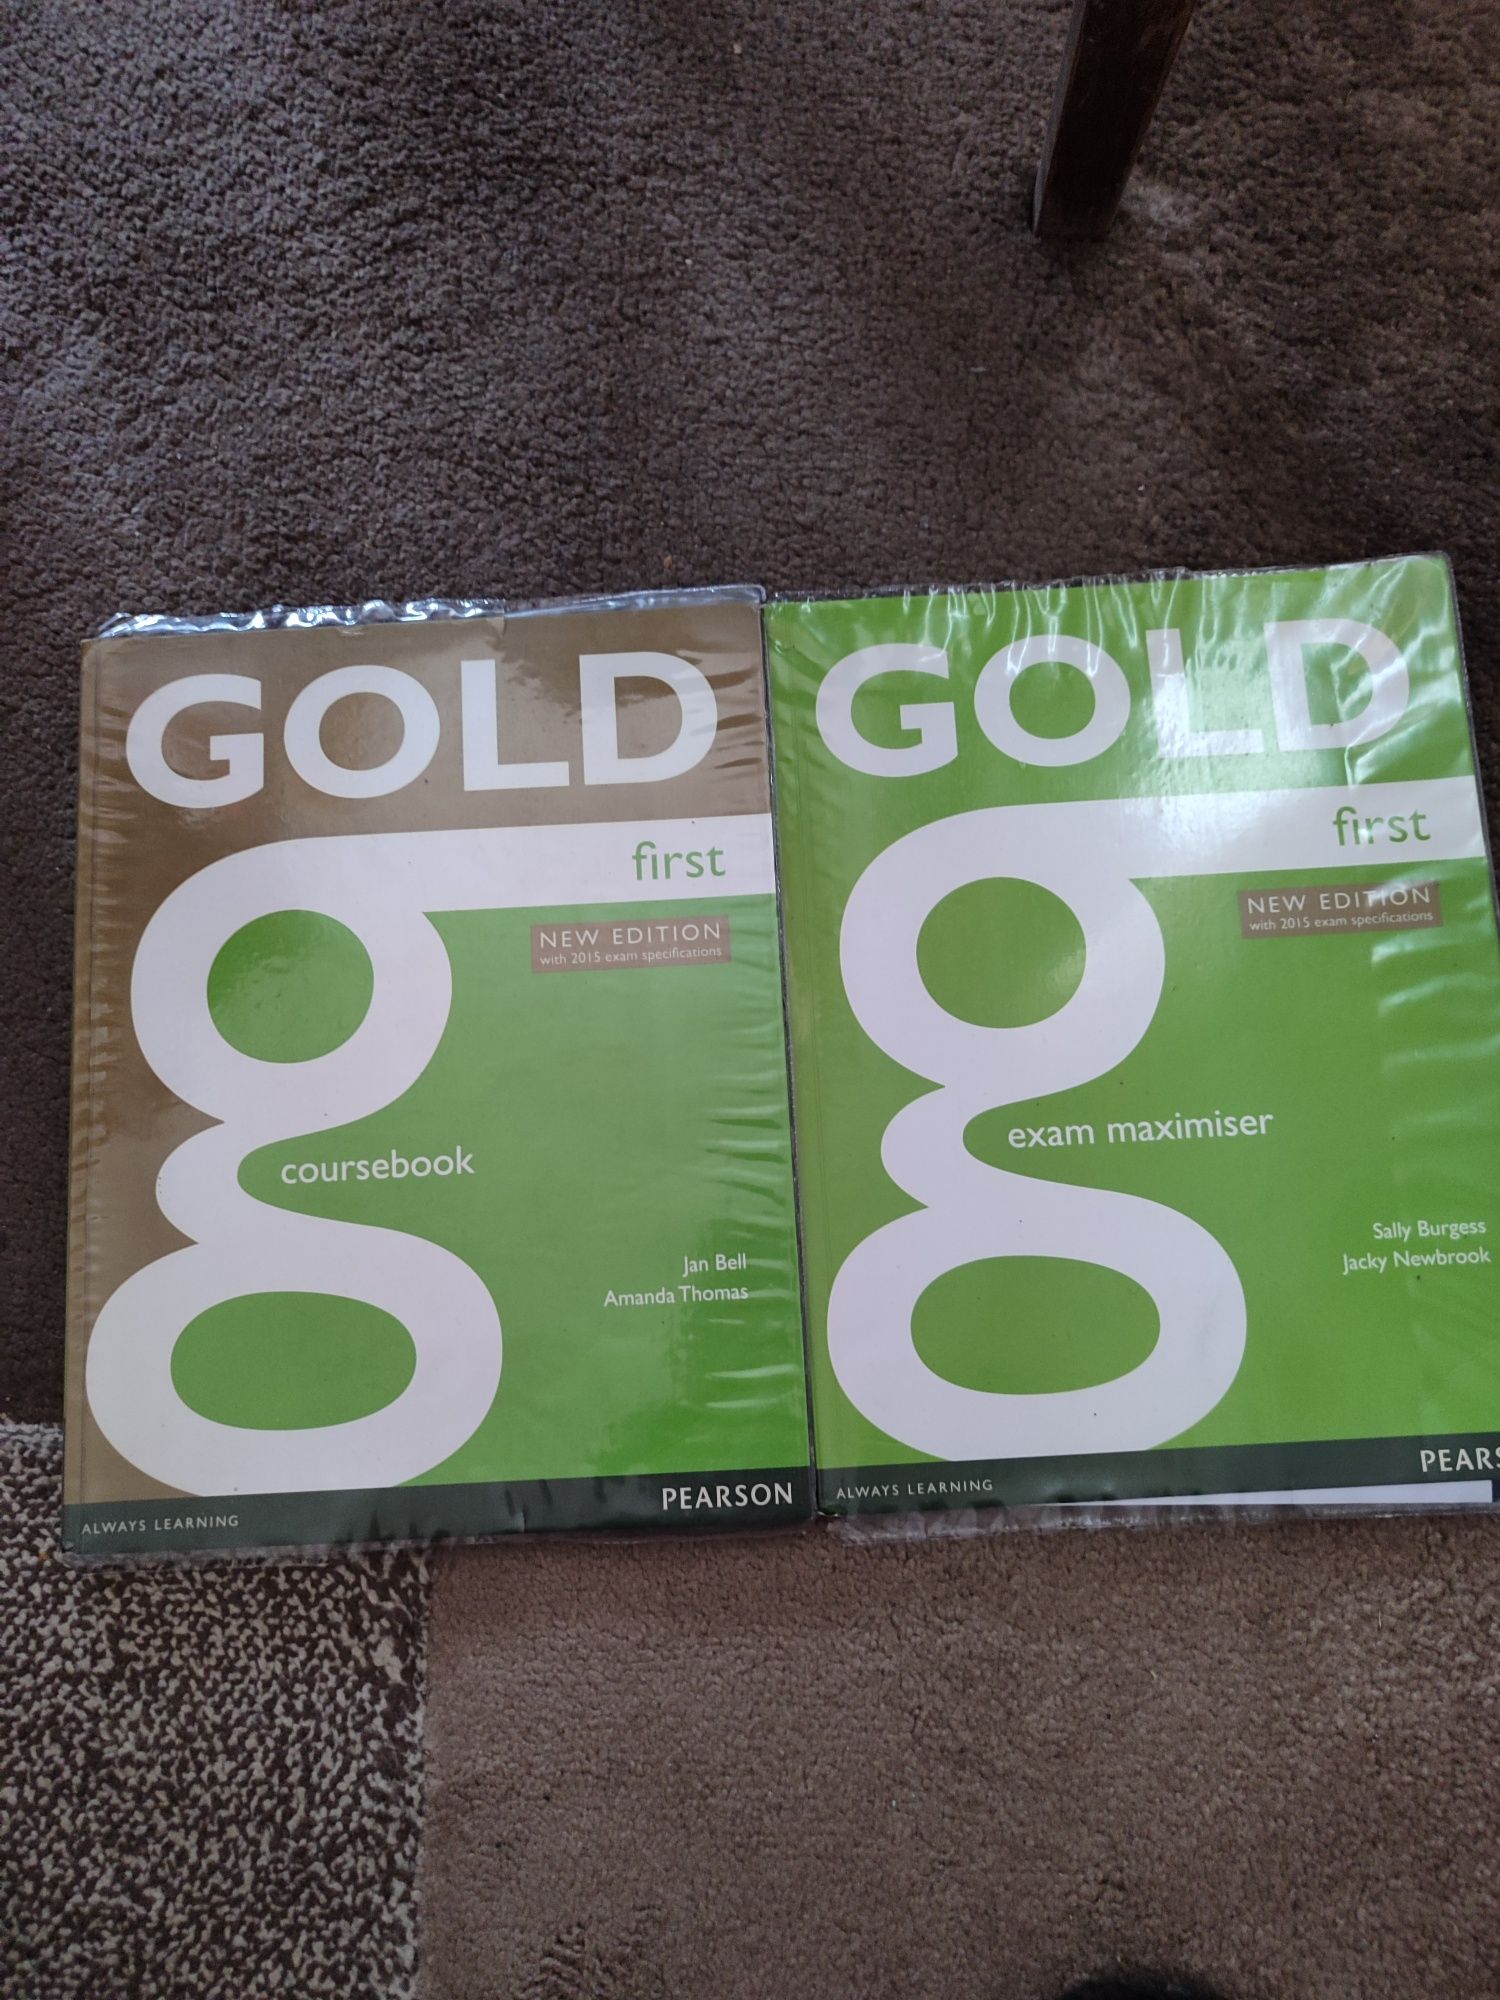 Gold first coursebook exam maximiser